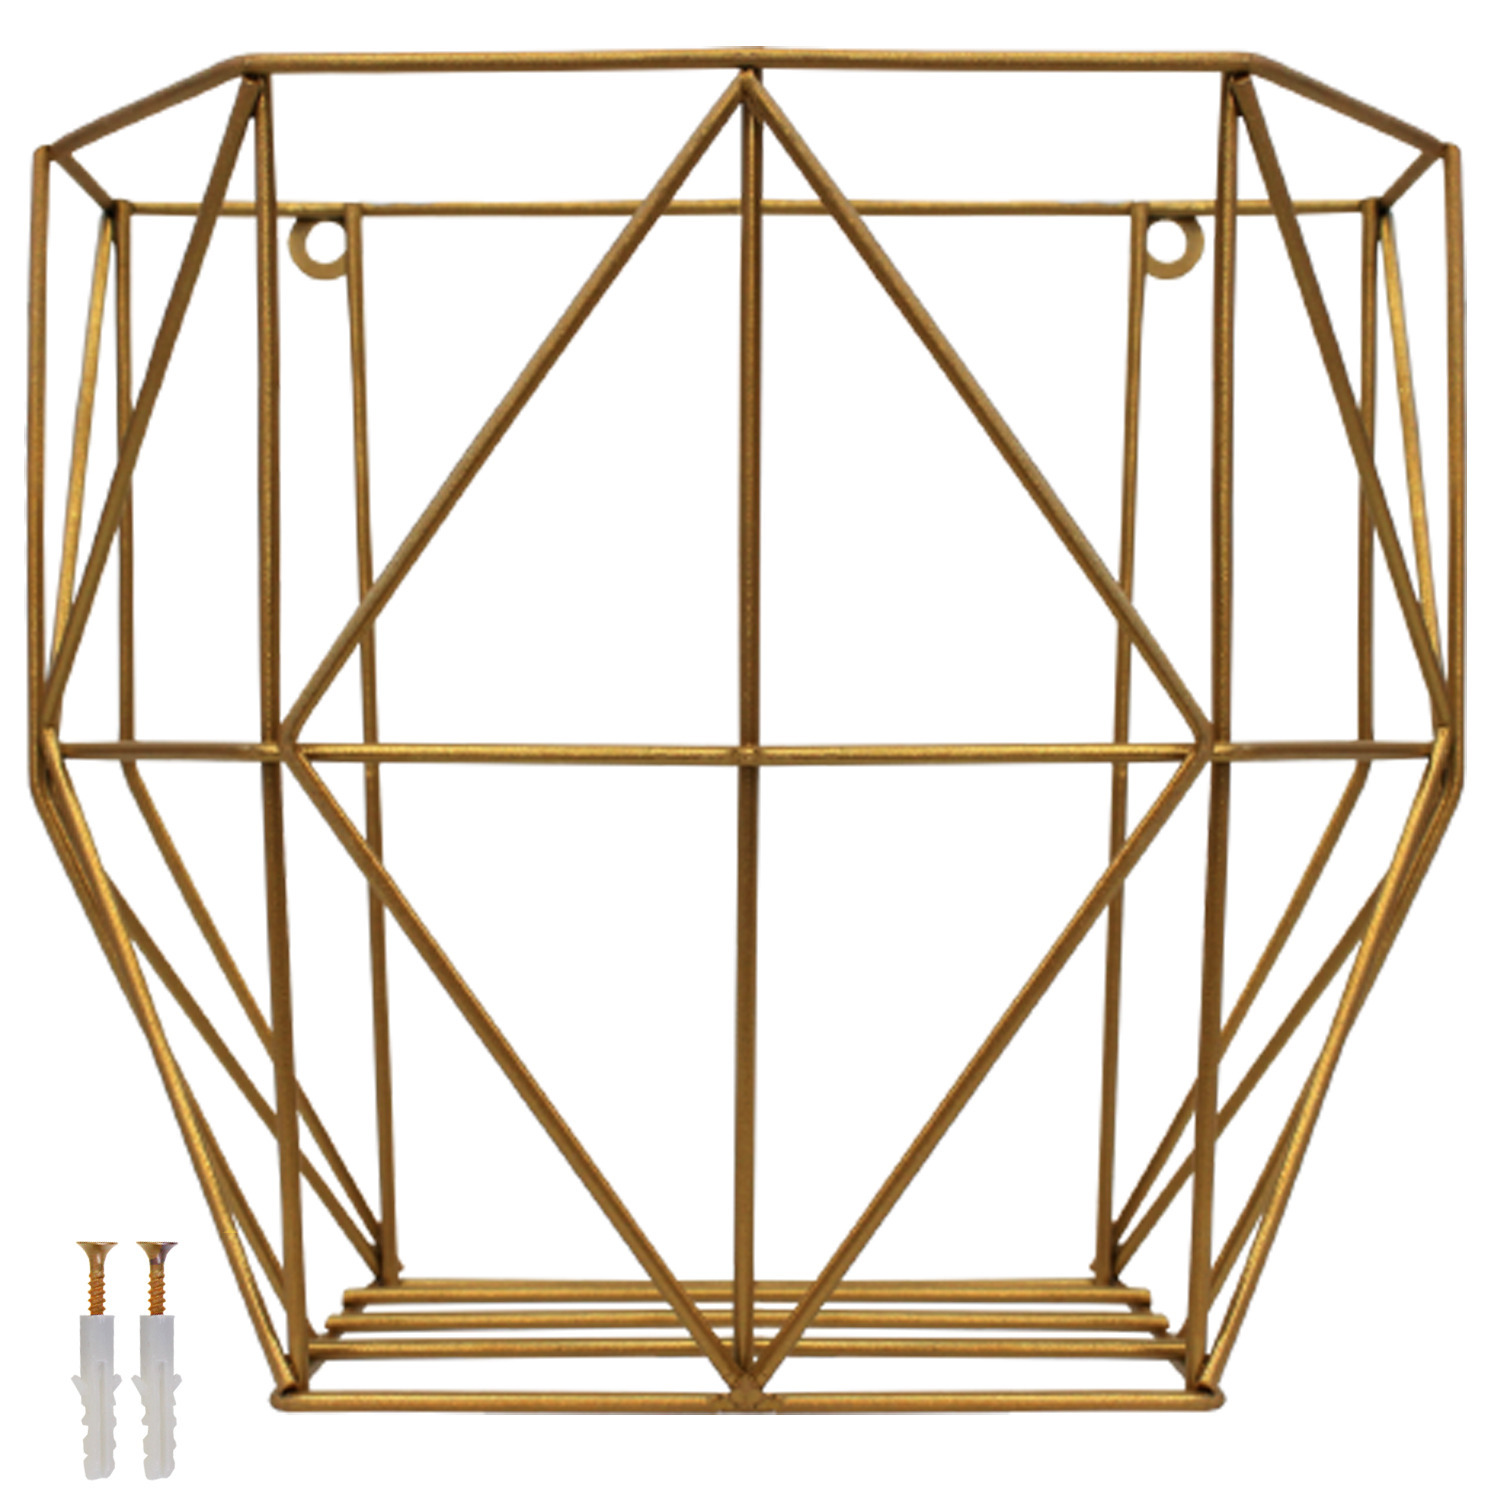 Hanging Fruit Basket Metal Wire Storage Organizer Wall Basket for Kitchen Gold - Small